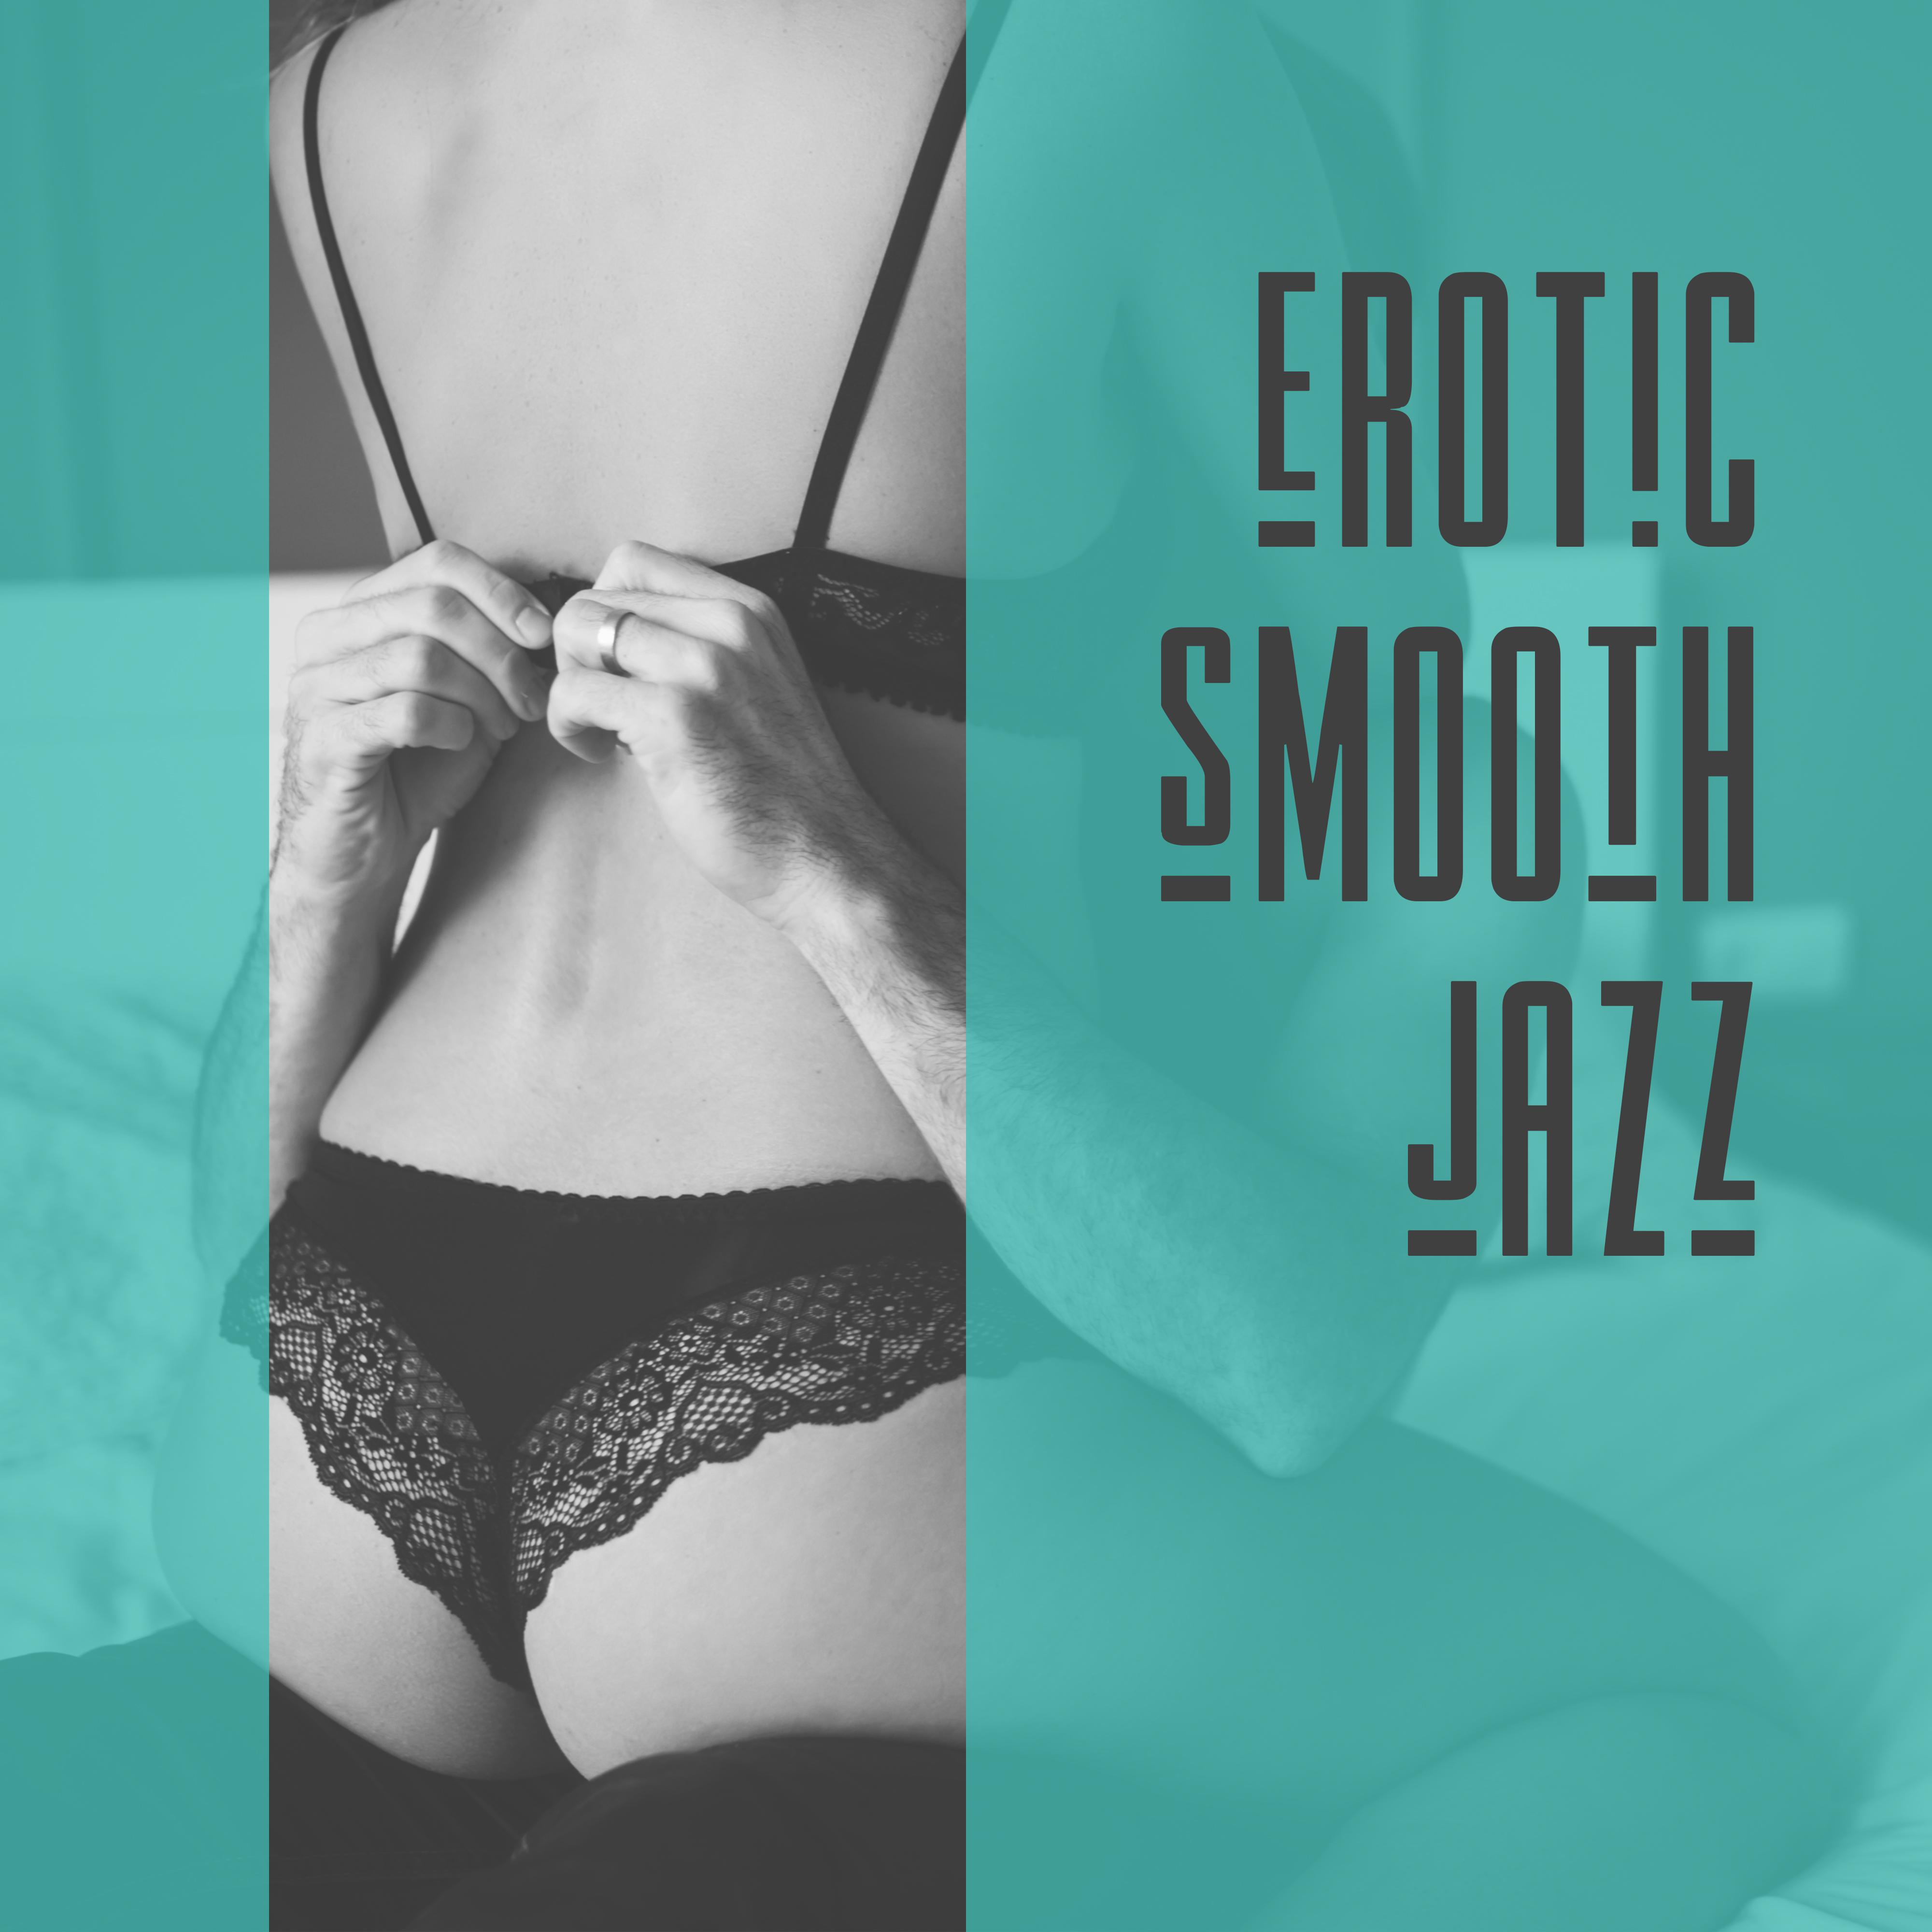 Erotic Smooth Jazz  Pure Jazz for Lovers, Romantic Songs,  Night Jazz, Erotic Massage, Making Love, Ambient Jazz